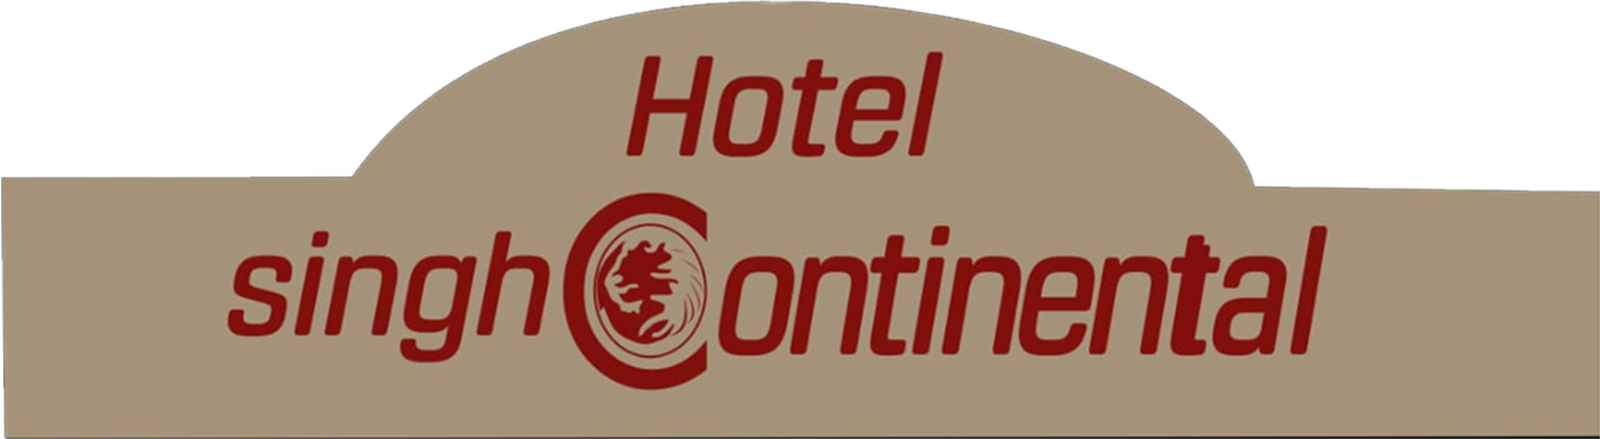 Hotel Singh Continental|Hotel|Accomodation